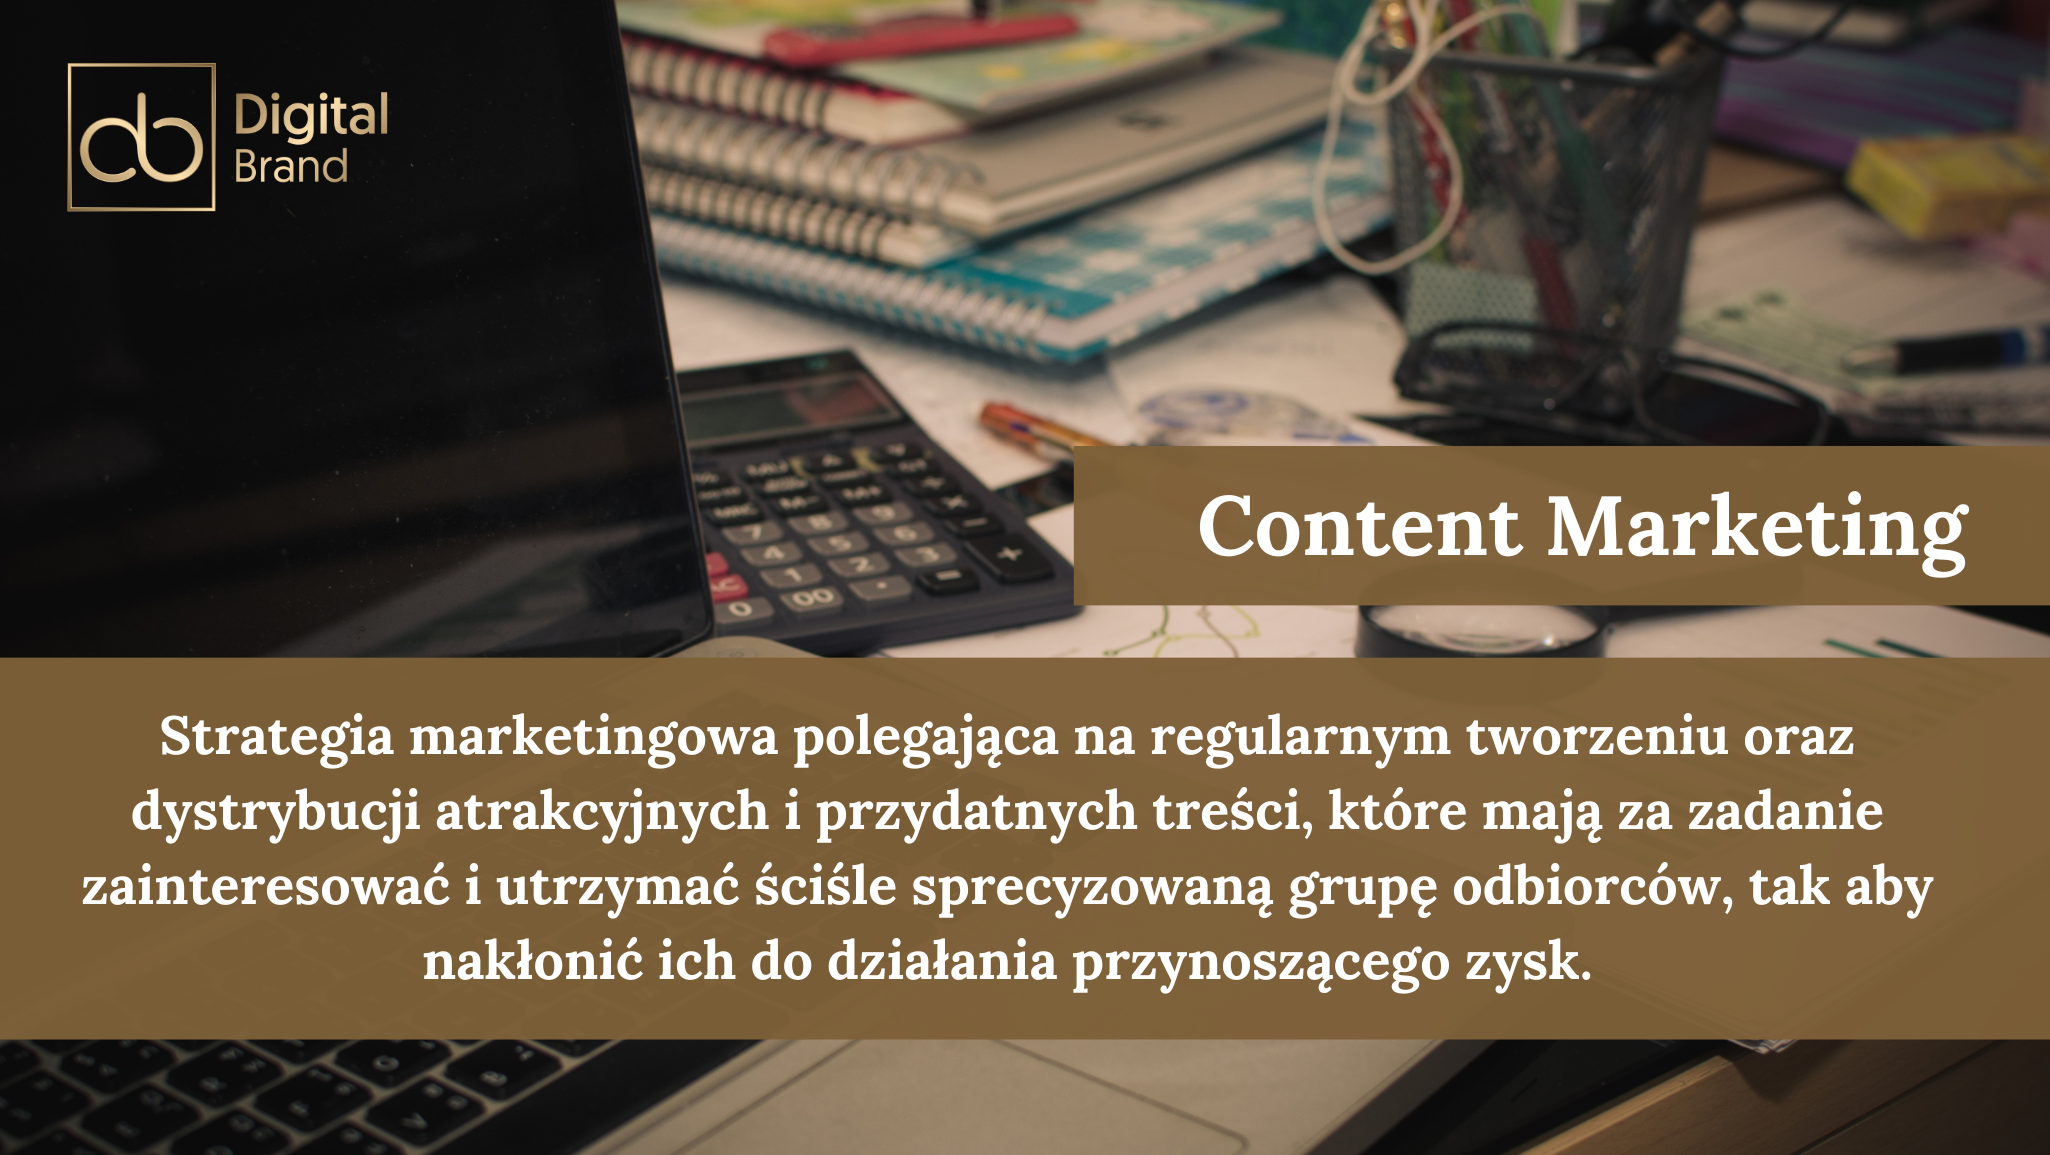 Content Marketing definicja digital brand